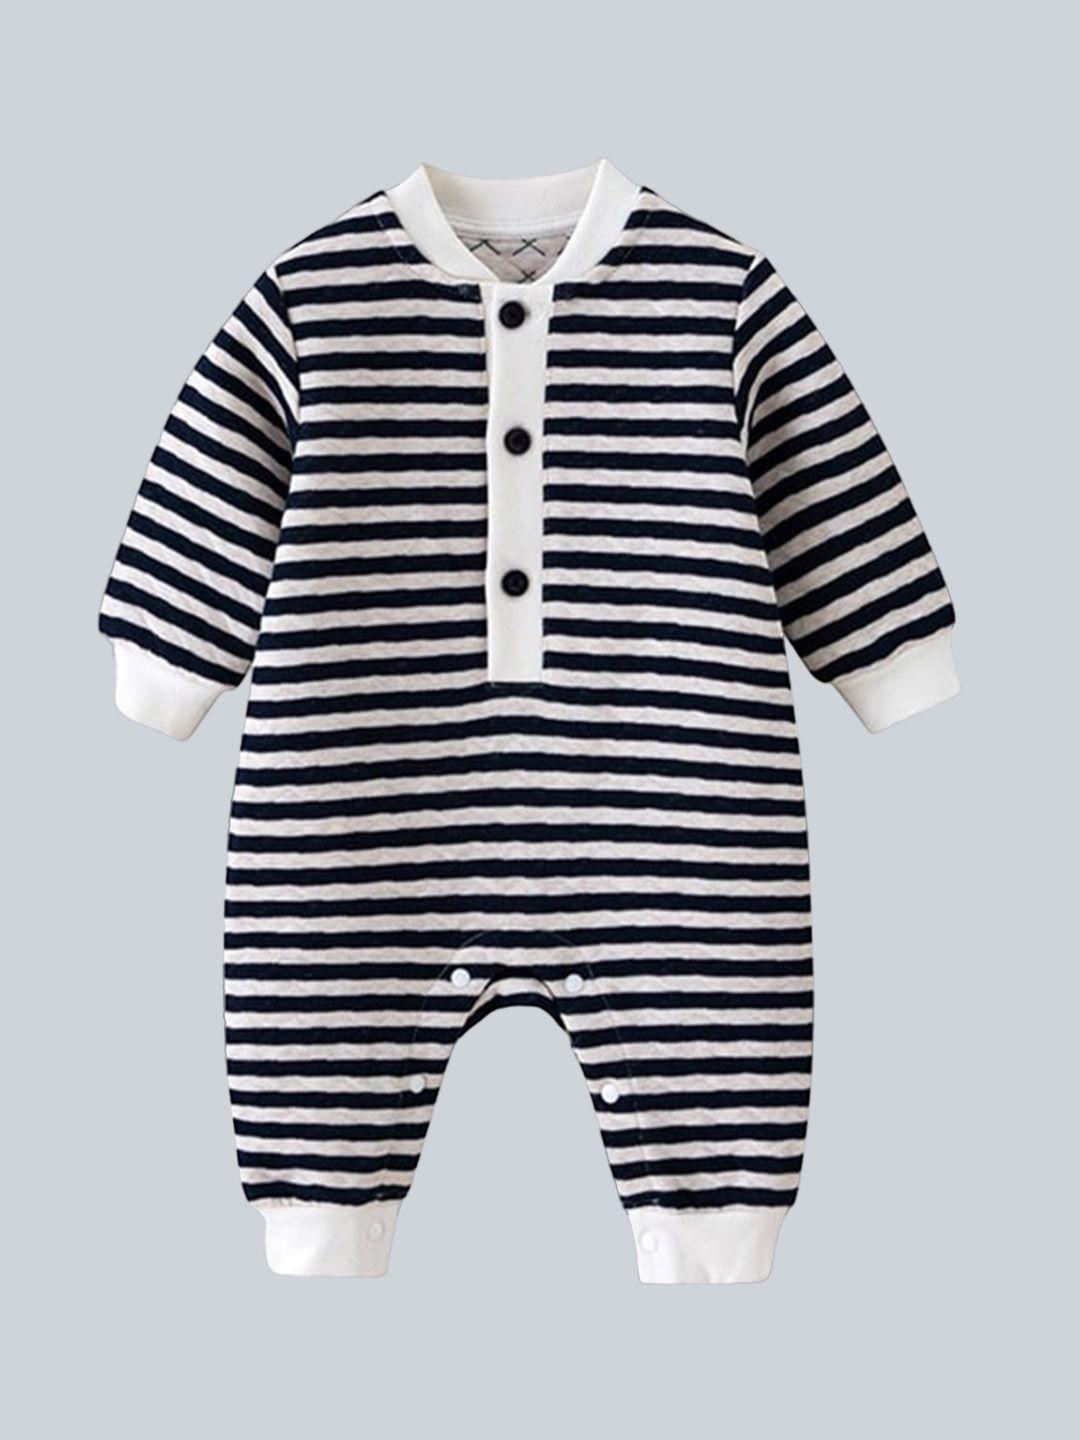 stylecast-infants-boys-navy-blue-striped-cotton-rompers